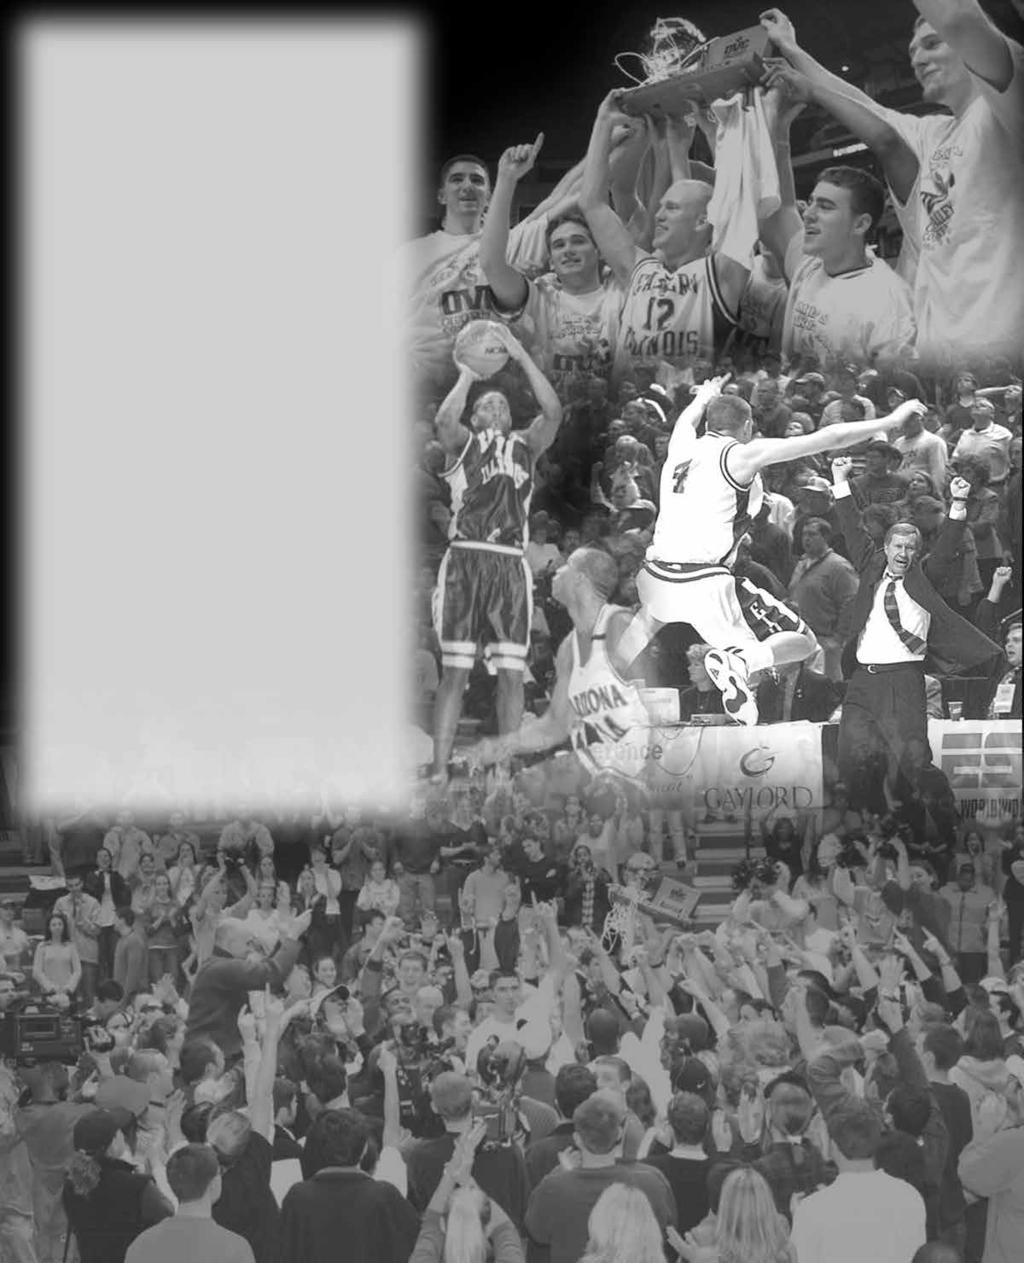 EASTERN ILLINOIS TOURNAMENT HISTORY SEASON TO REMEMBER IN 2001 CRASHING THE 'BIG DANCE'.